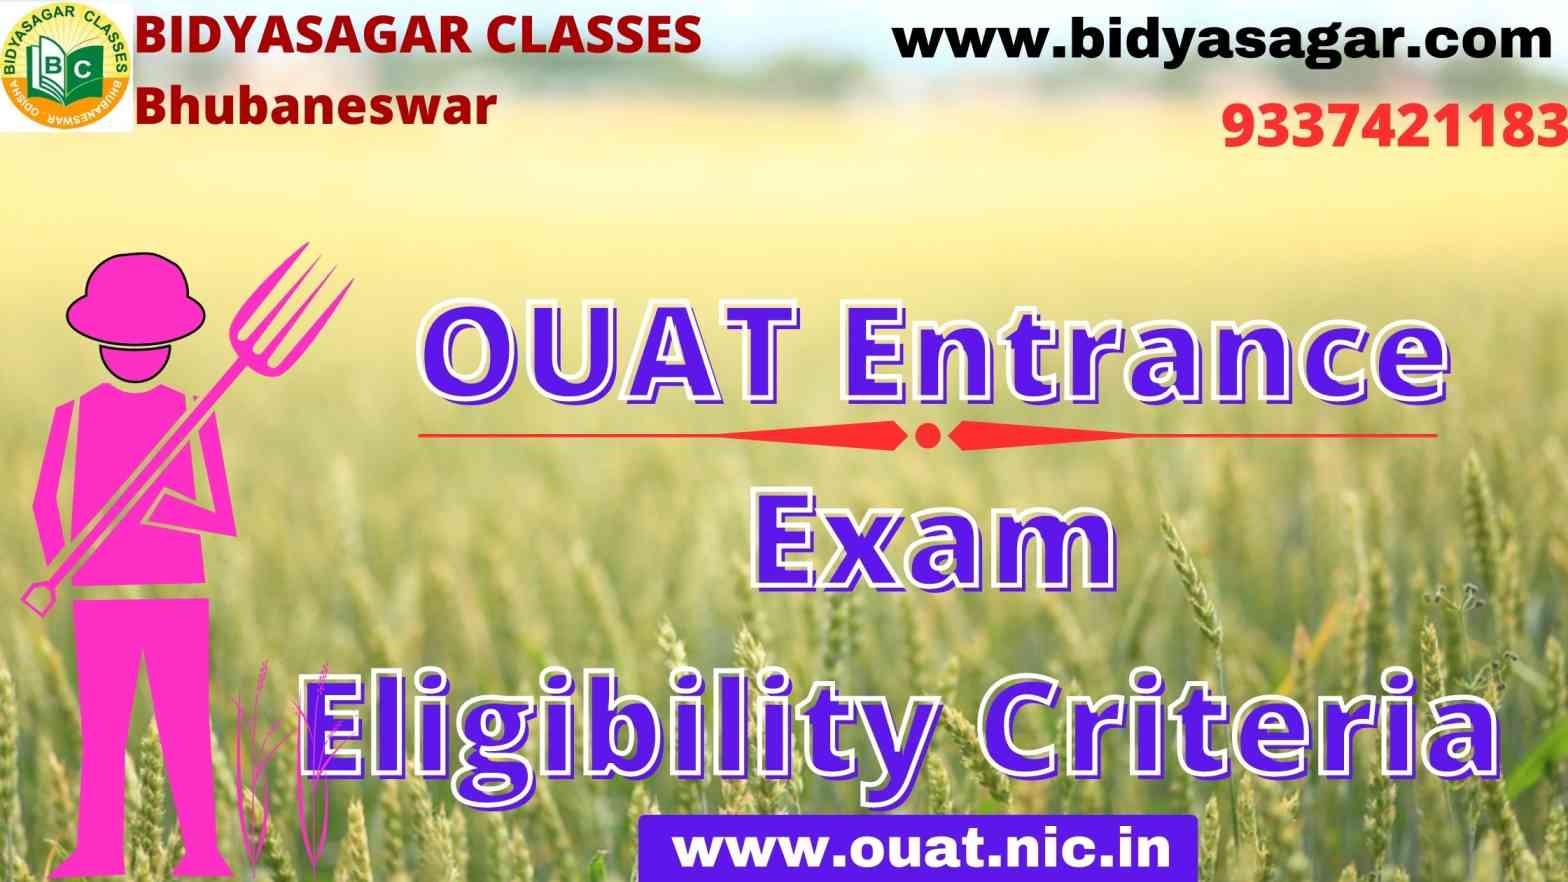 OUAT Entrance Exam Eligibility Criteria